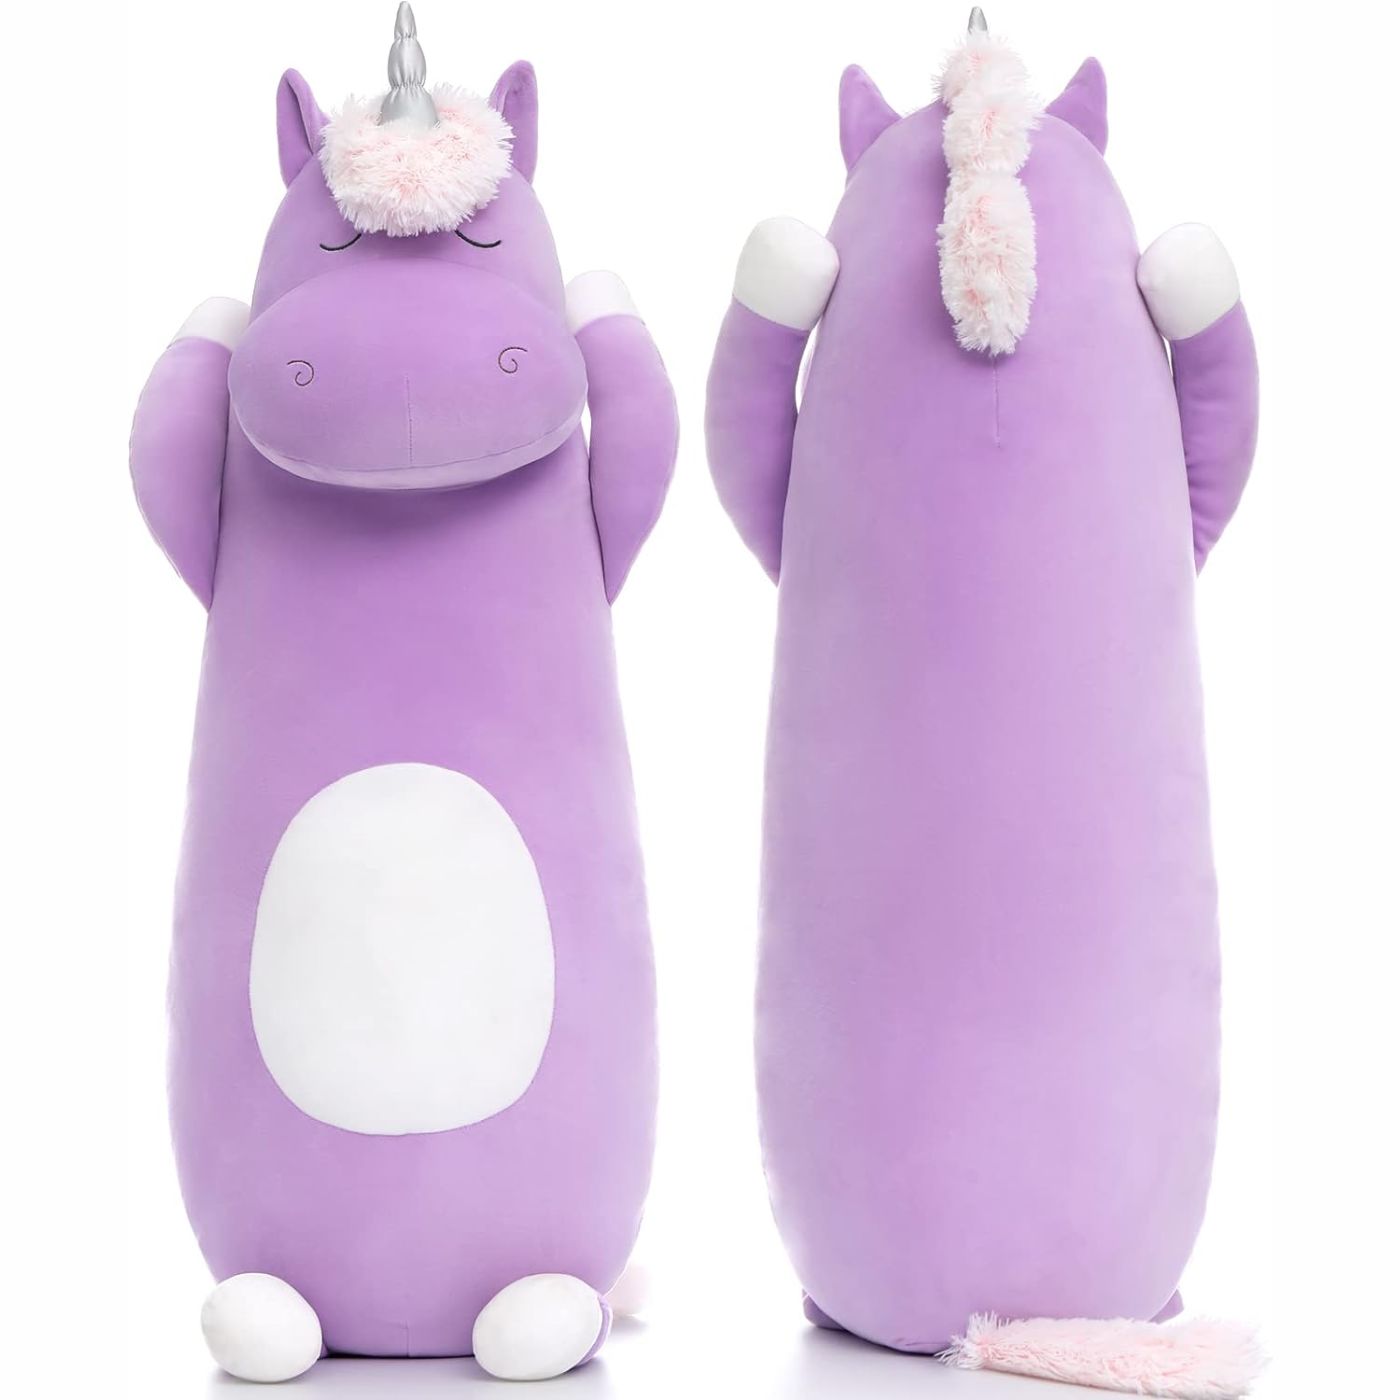 Giant Unicorn Body Pillow, Purple, 23.6/36.2 Inches - MorisMos Stuffed Animals